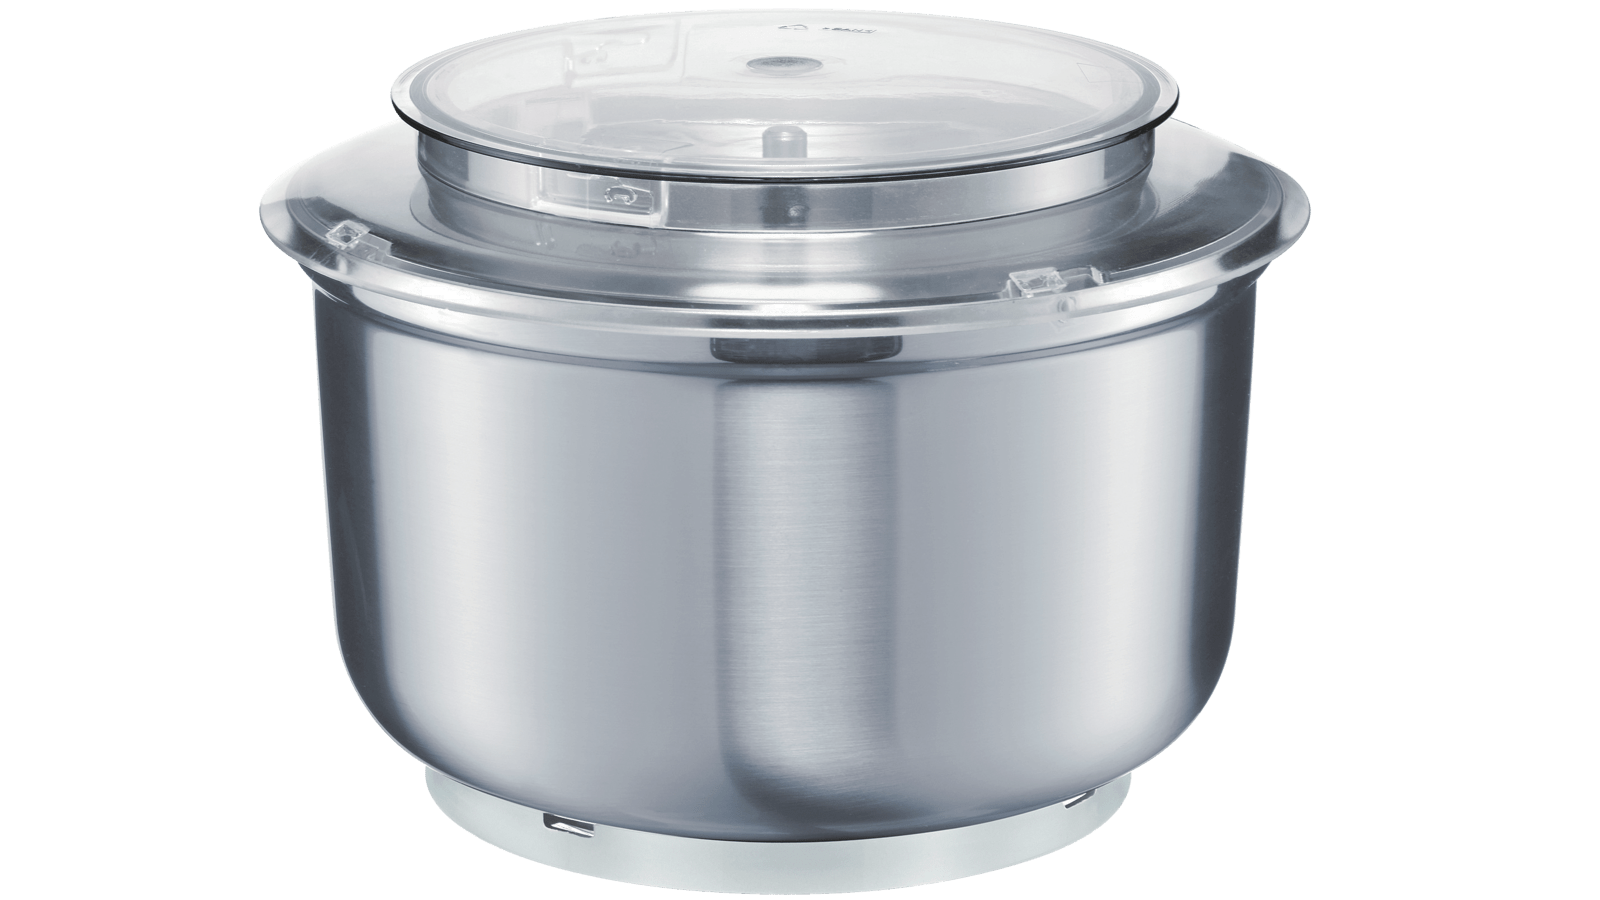 Bosch Universal Plus Bottom Drive Stainless Steel Bowl